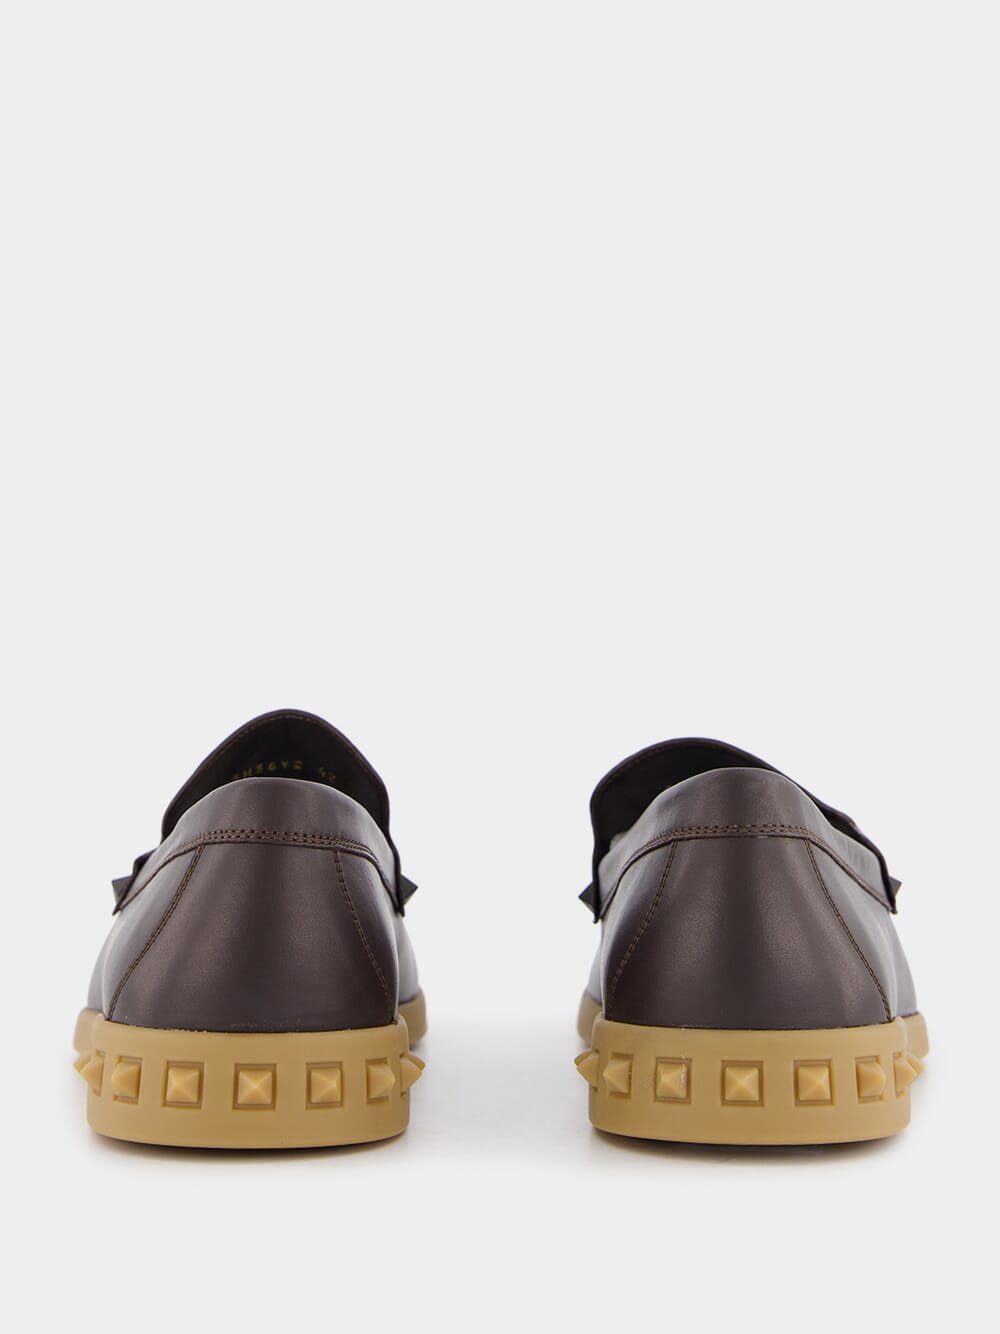 Valentino GaravaniLeisure Flows Brown Leather Loafers at Fashion Clinic